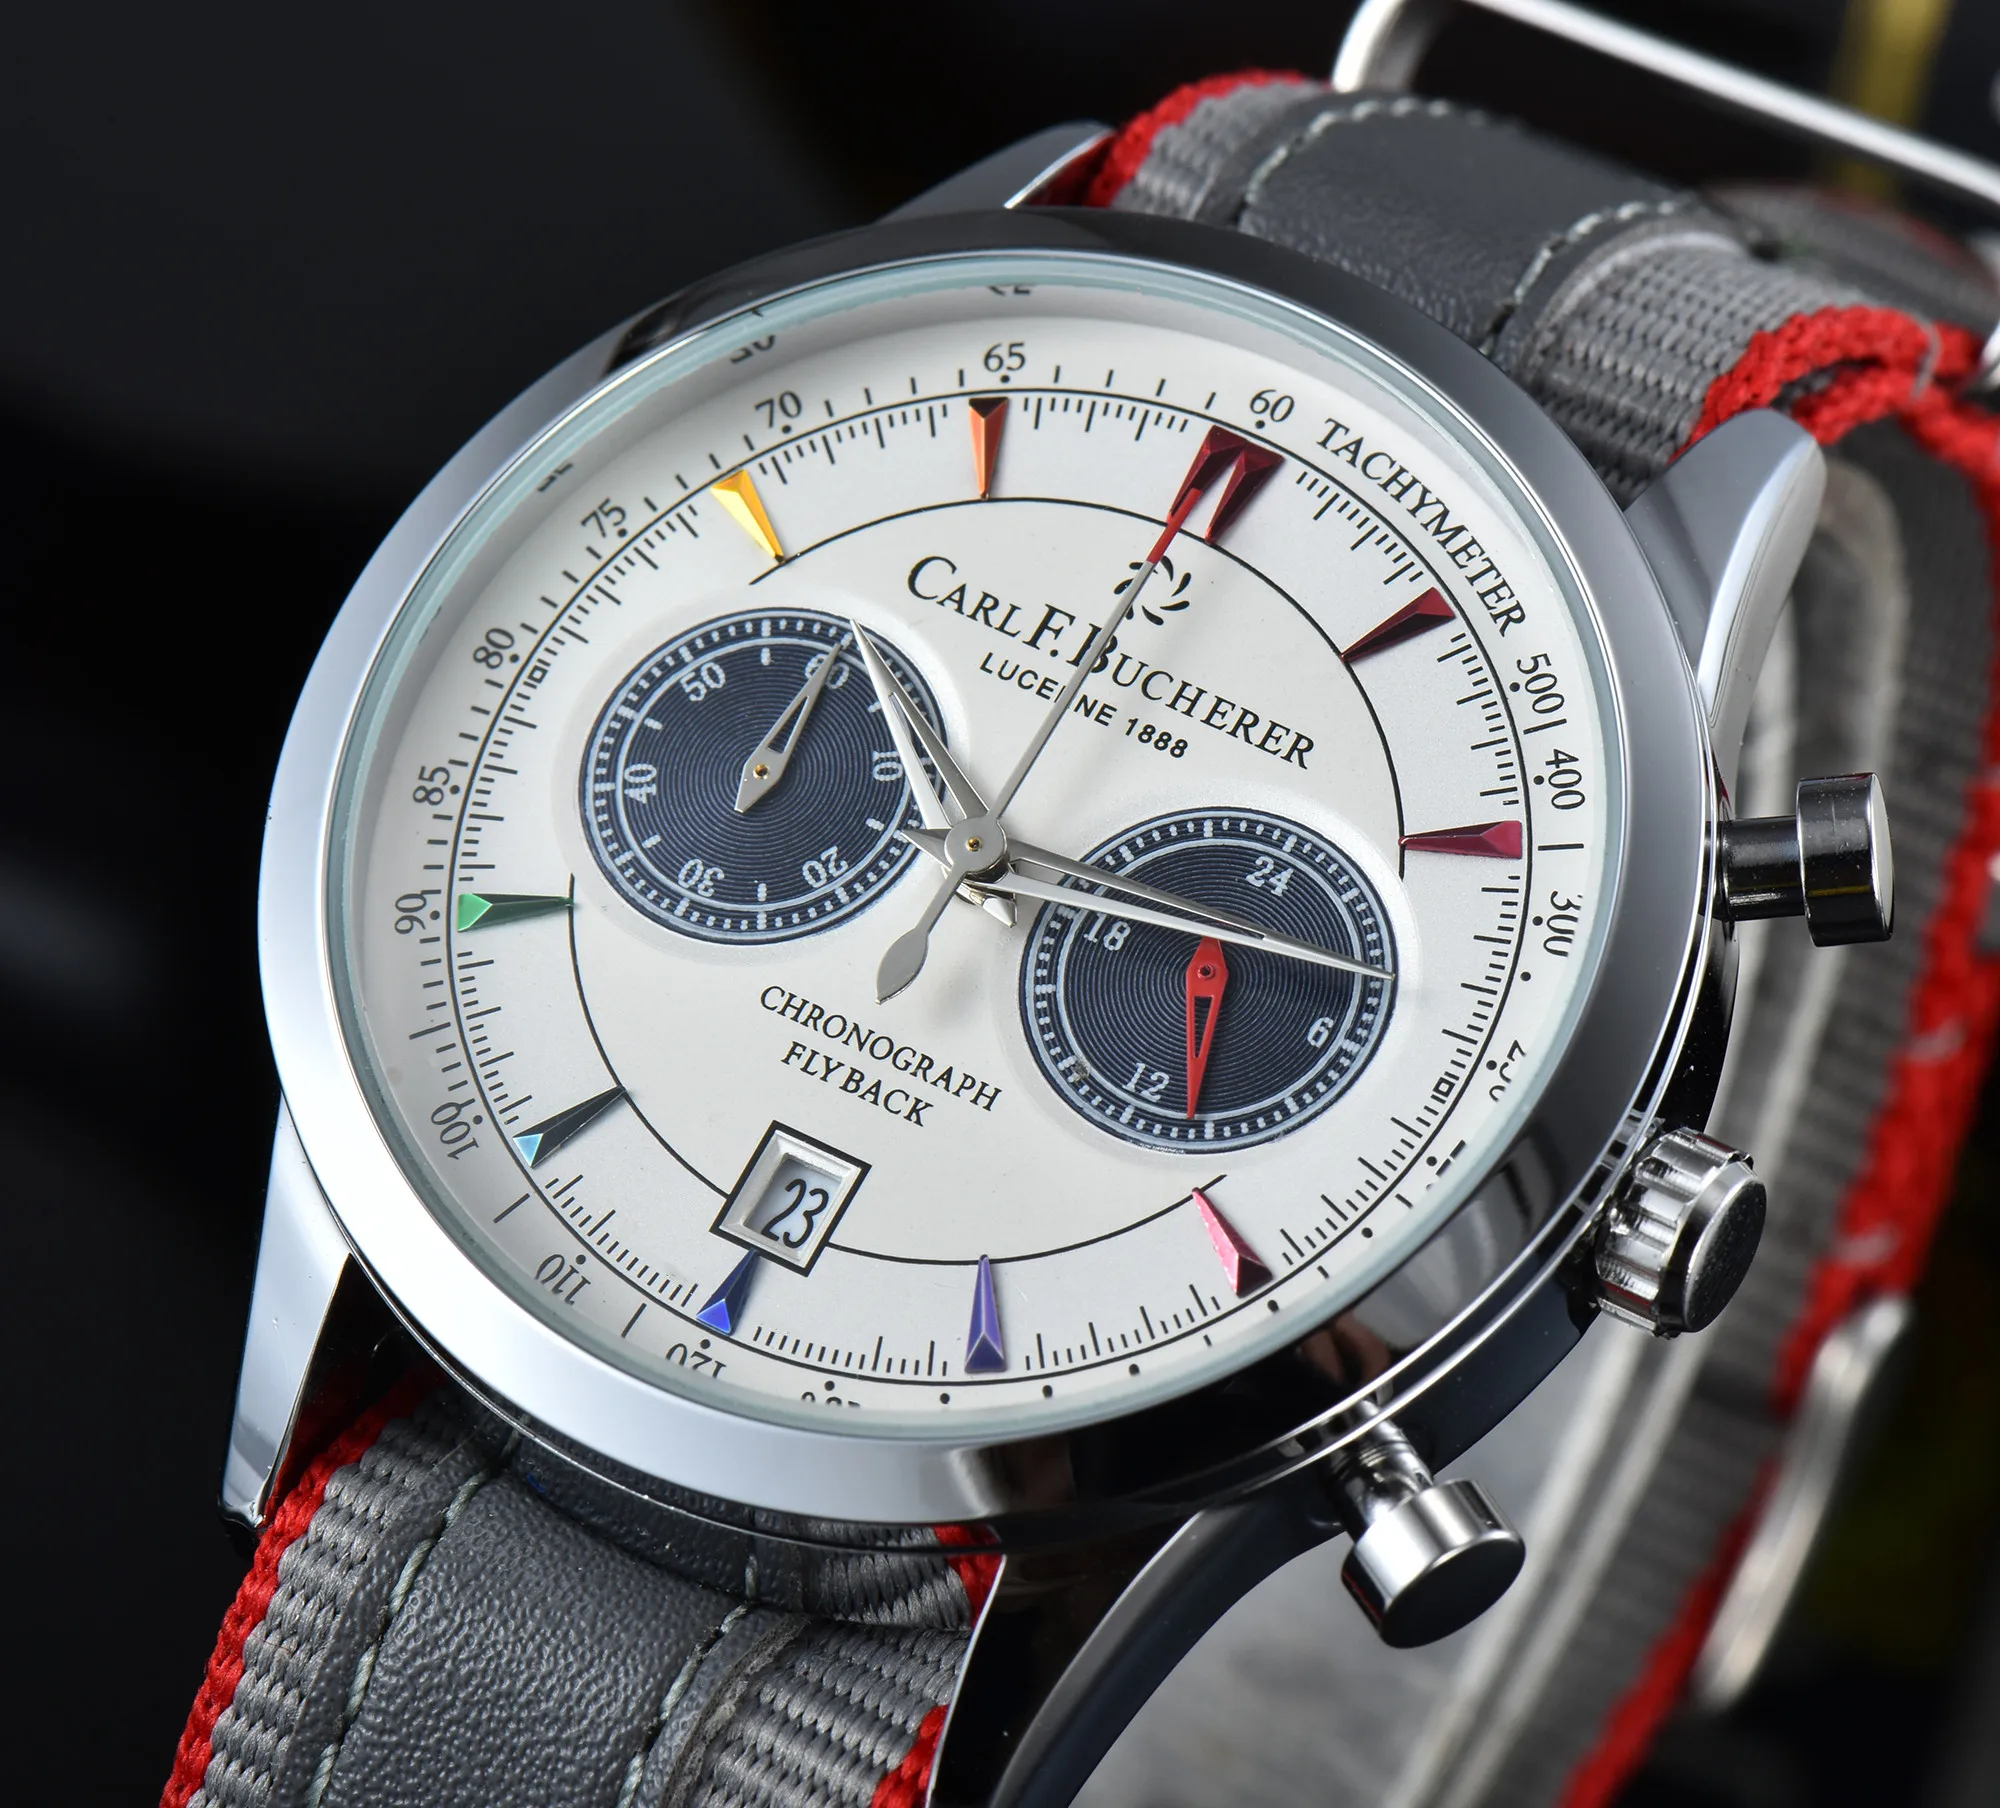 

Carl F. Bucherer Watch Limited Edition Maliron Collection Multifunction Chronograph Top Fabric Strap Quartz Watch Reloj Hombre